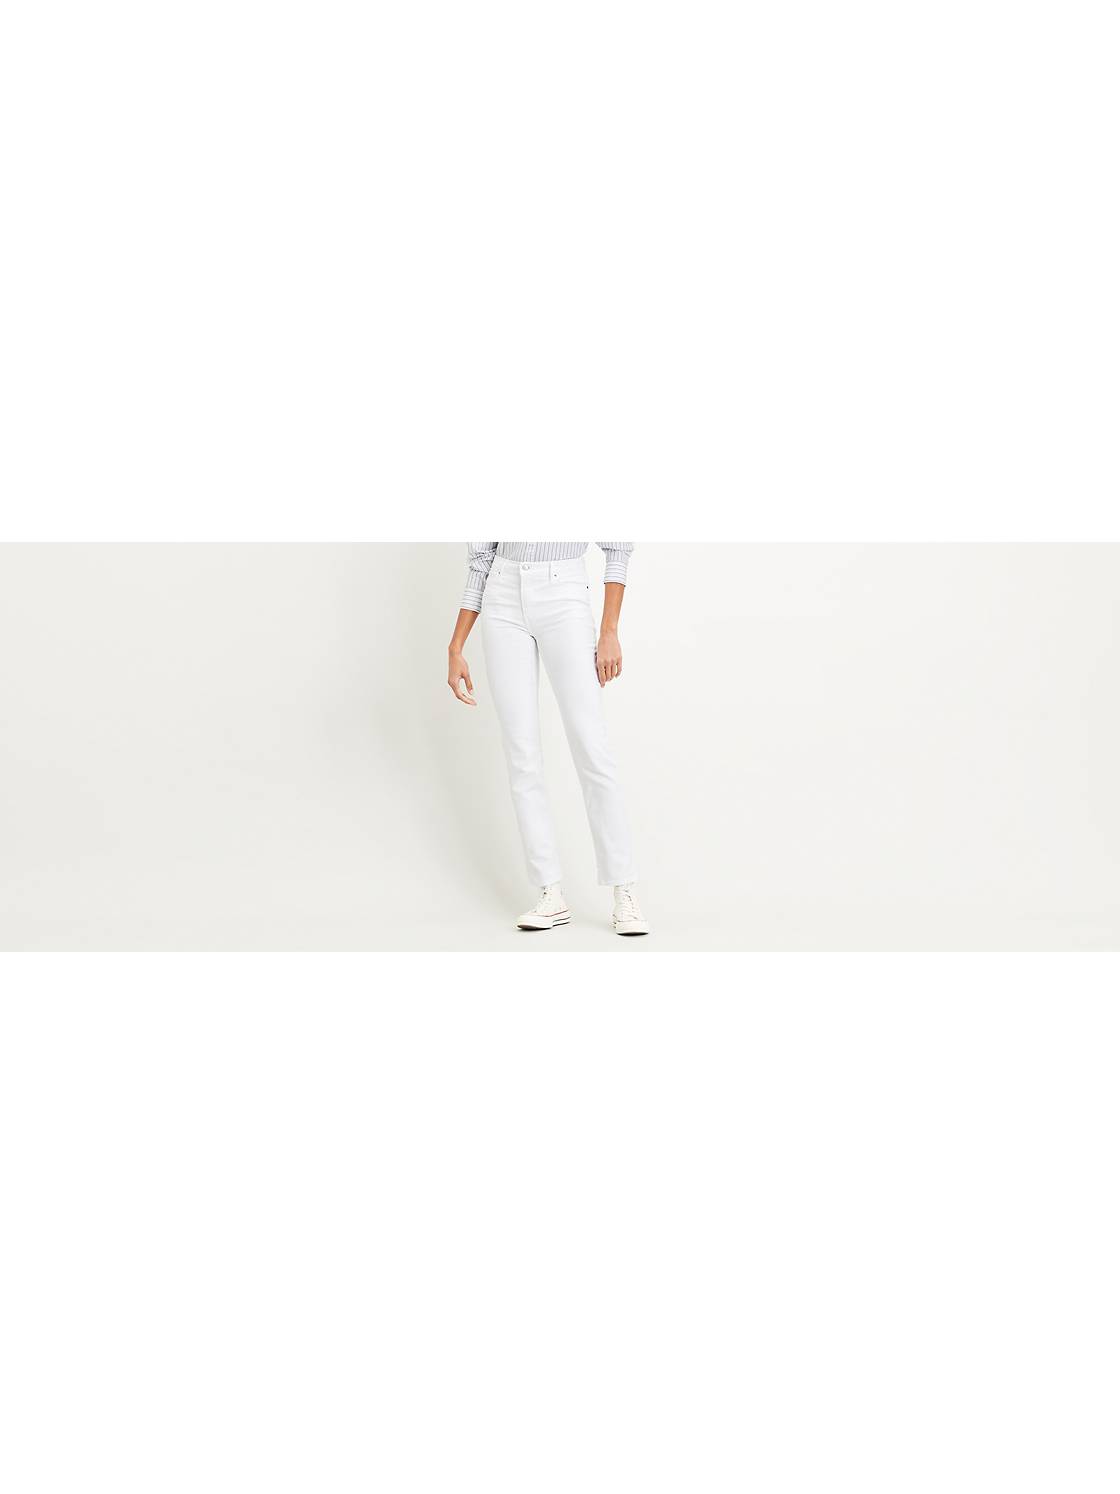 mikroskopisk Bekræftelse Markeret Women's White Jeans: Shop White Jeans for Women | Levi's® US